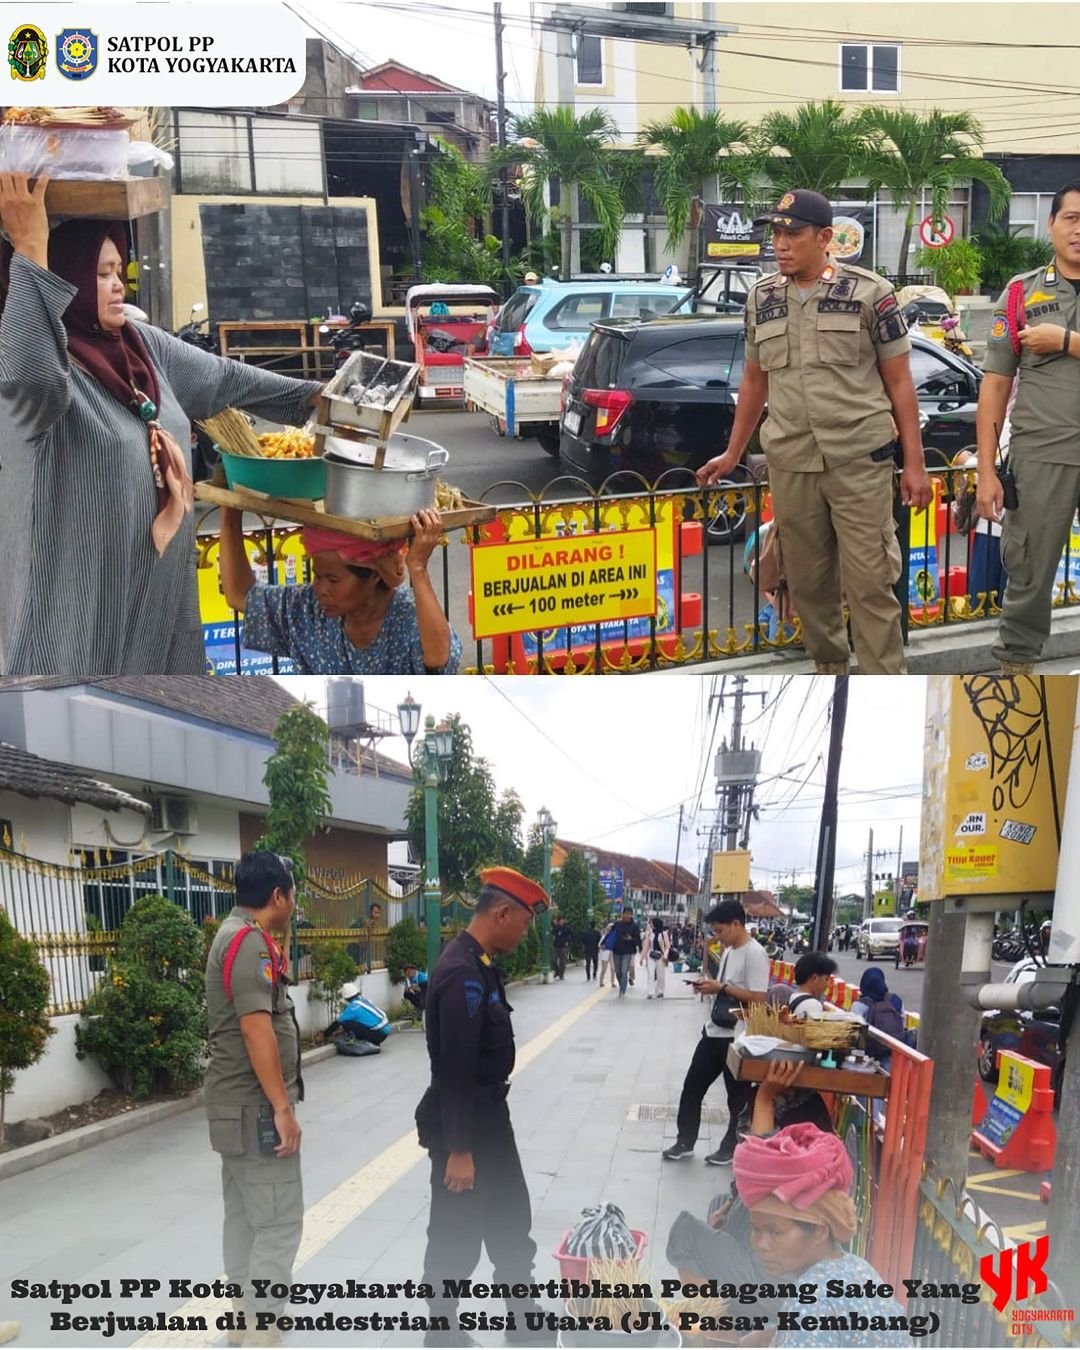 Satpol PP Kota Yogyakarta Menertibkan Pedagang Sate Yang Berjualan di Pendestrian Sisi Utara (Jl. Pasar Kembang).